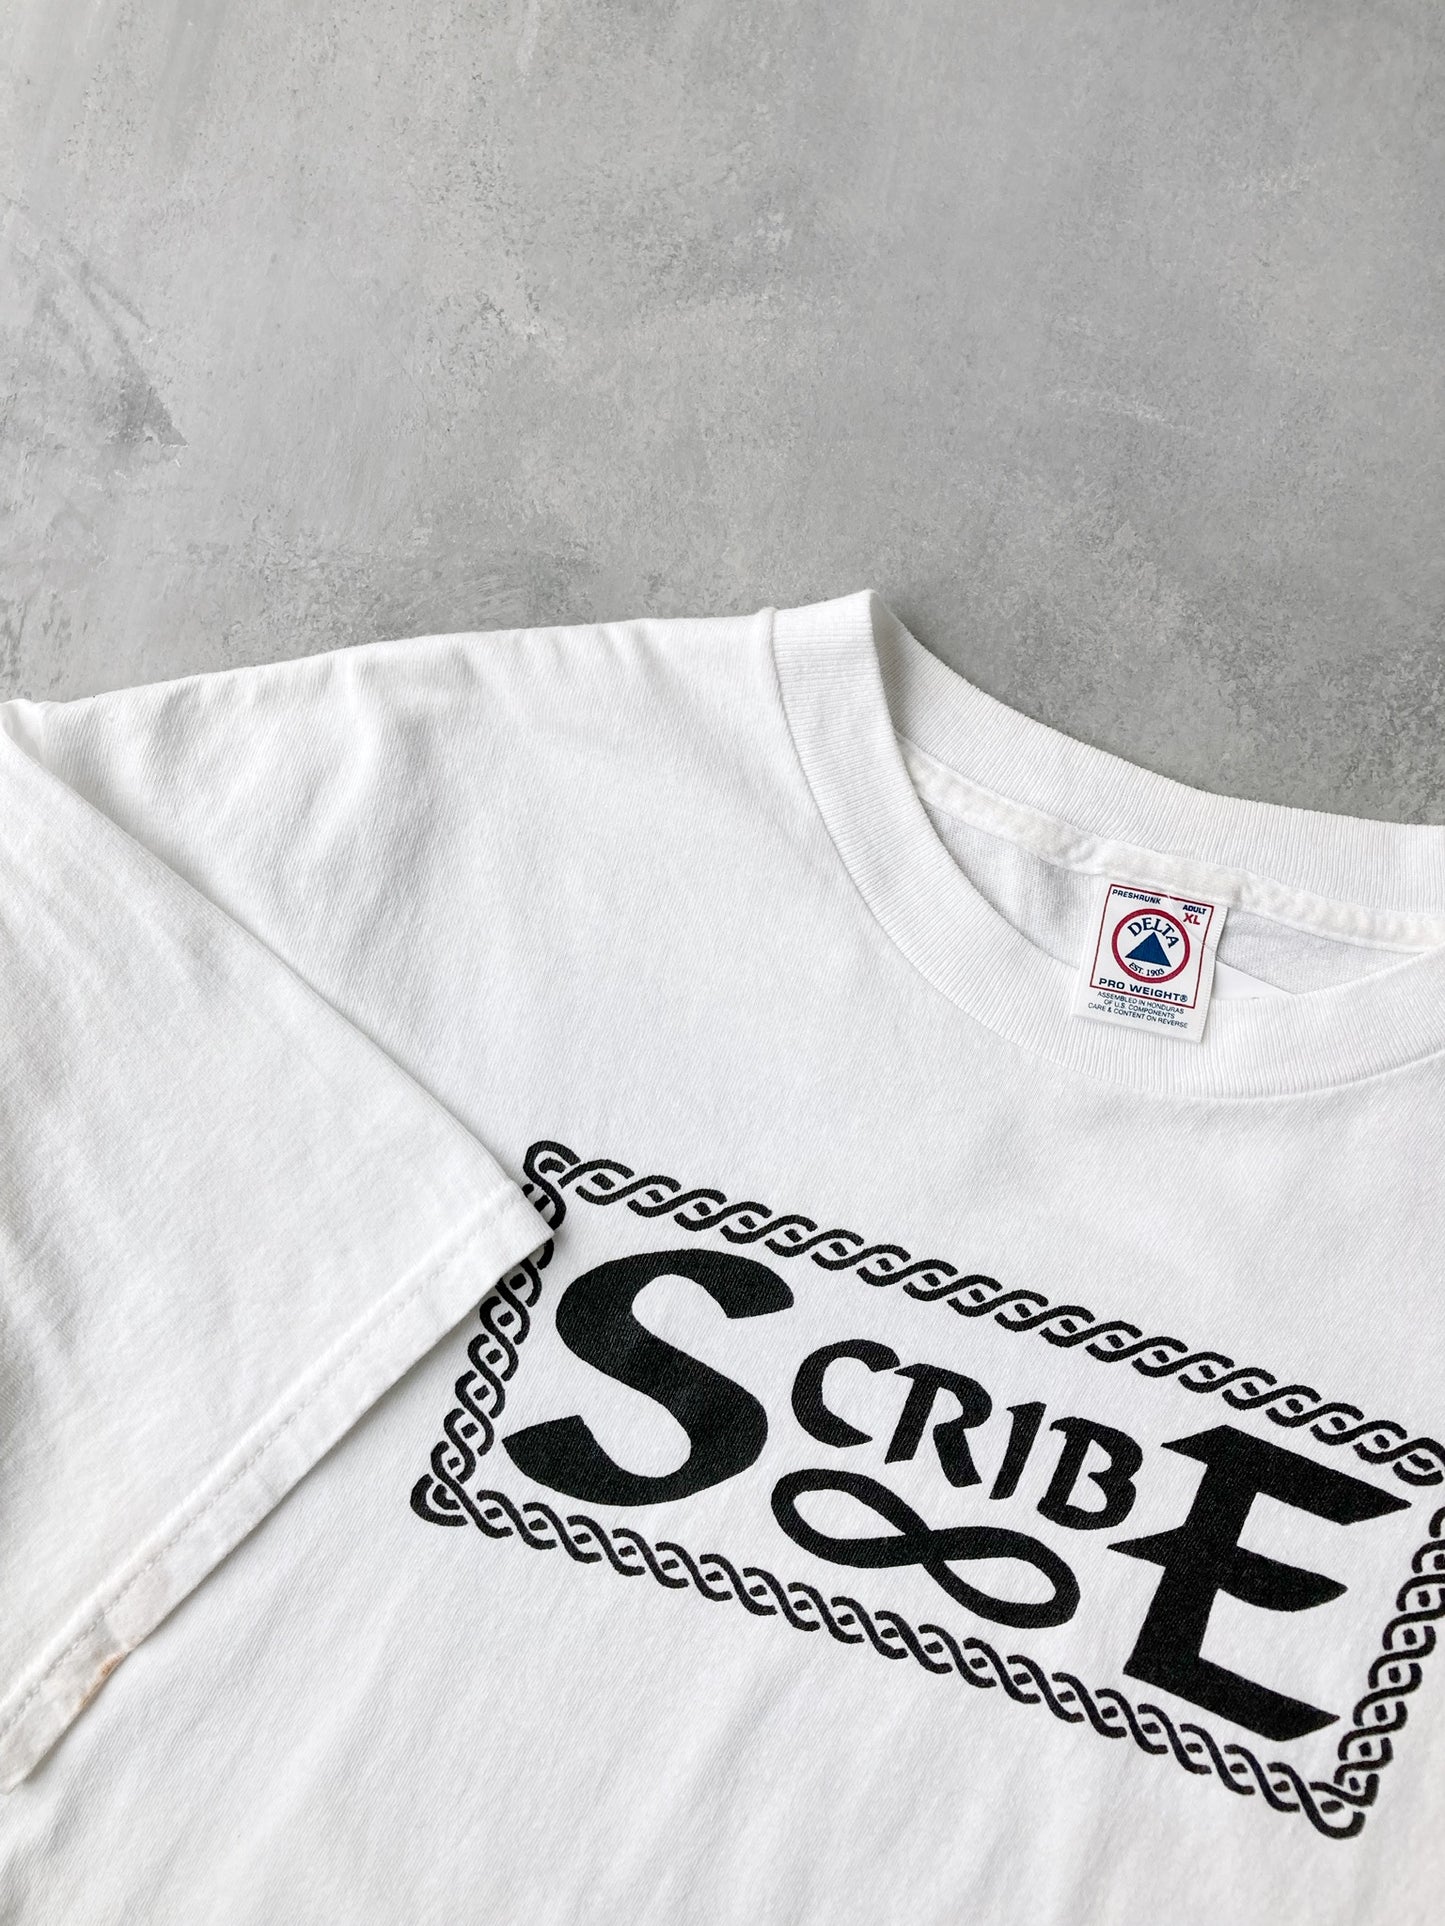 Scribe T-Shirt 00's - XL